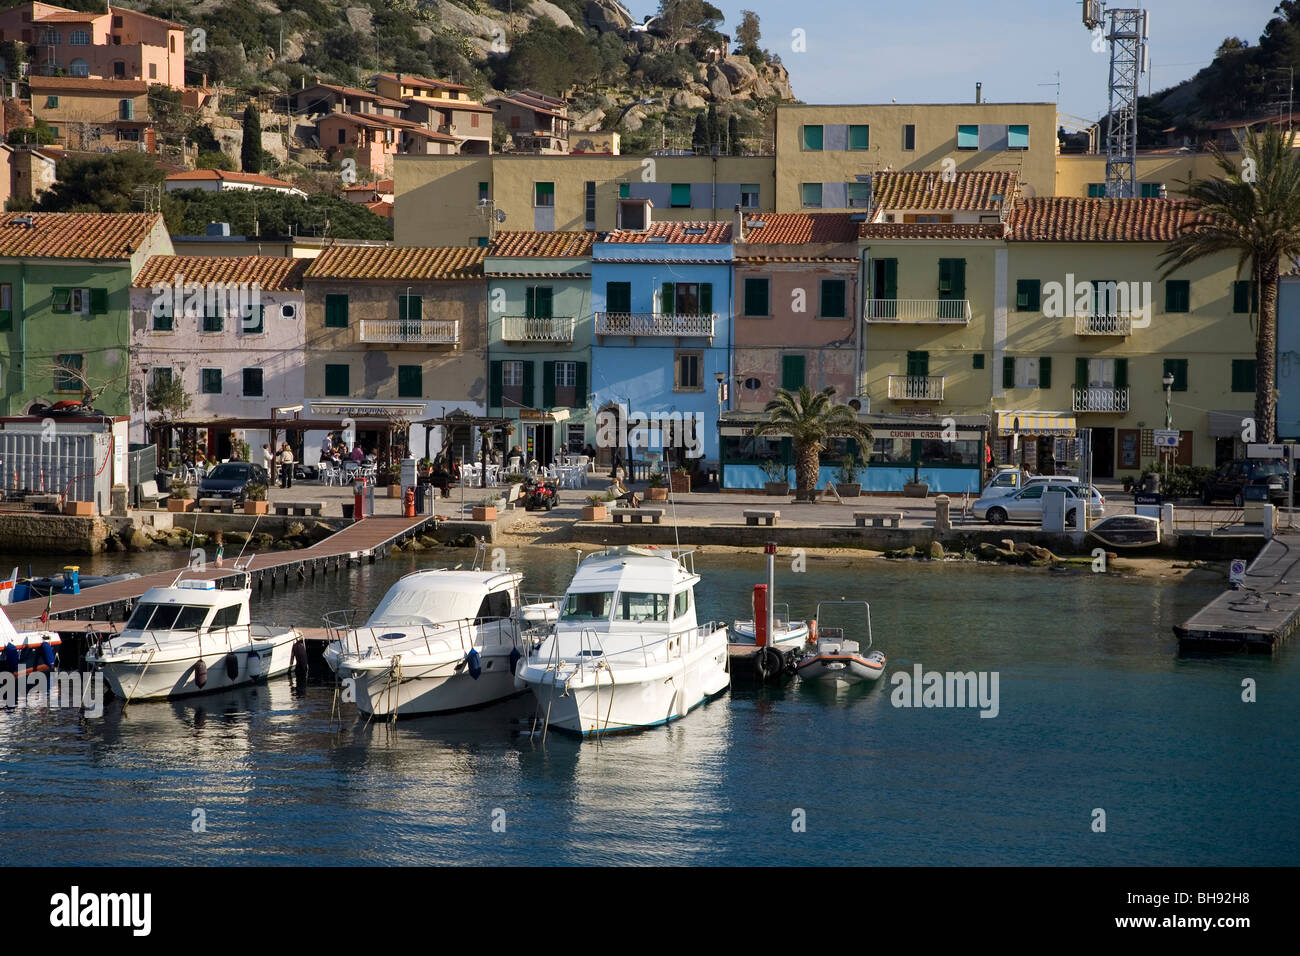 Harbour of Porto, Giglio Island, Mediterranean Sea, Italy Stock Photo